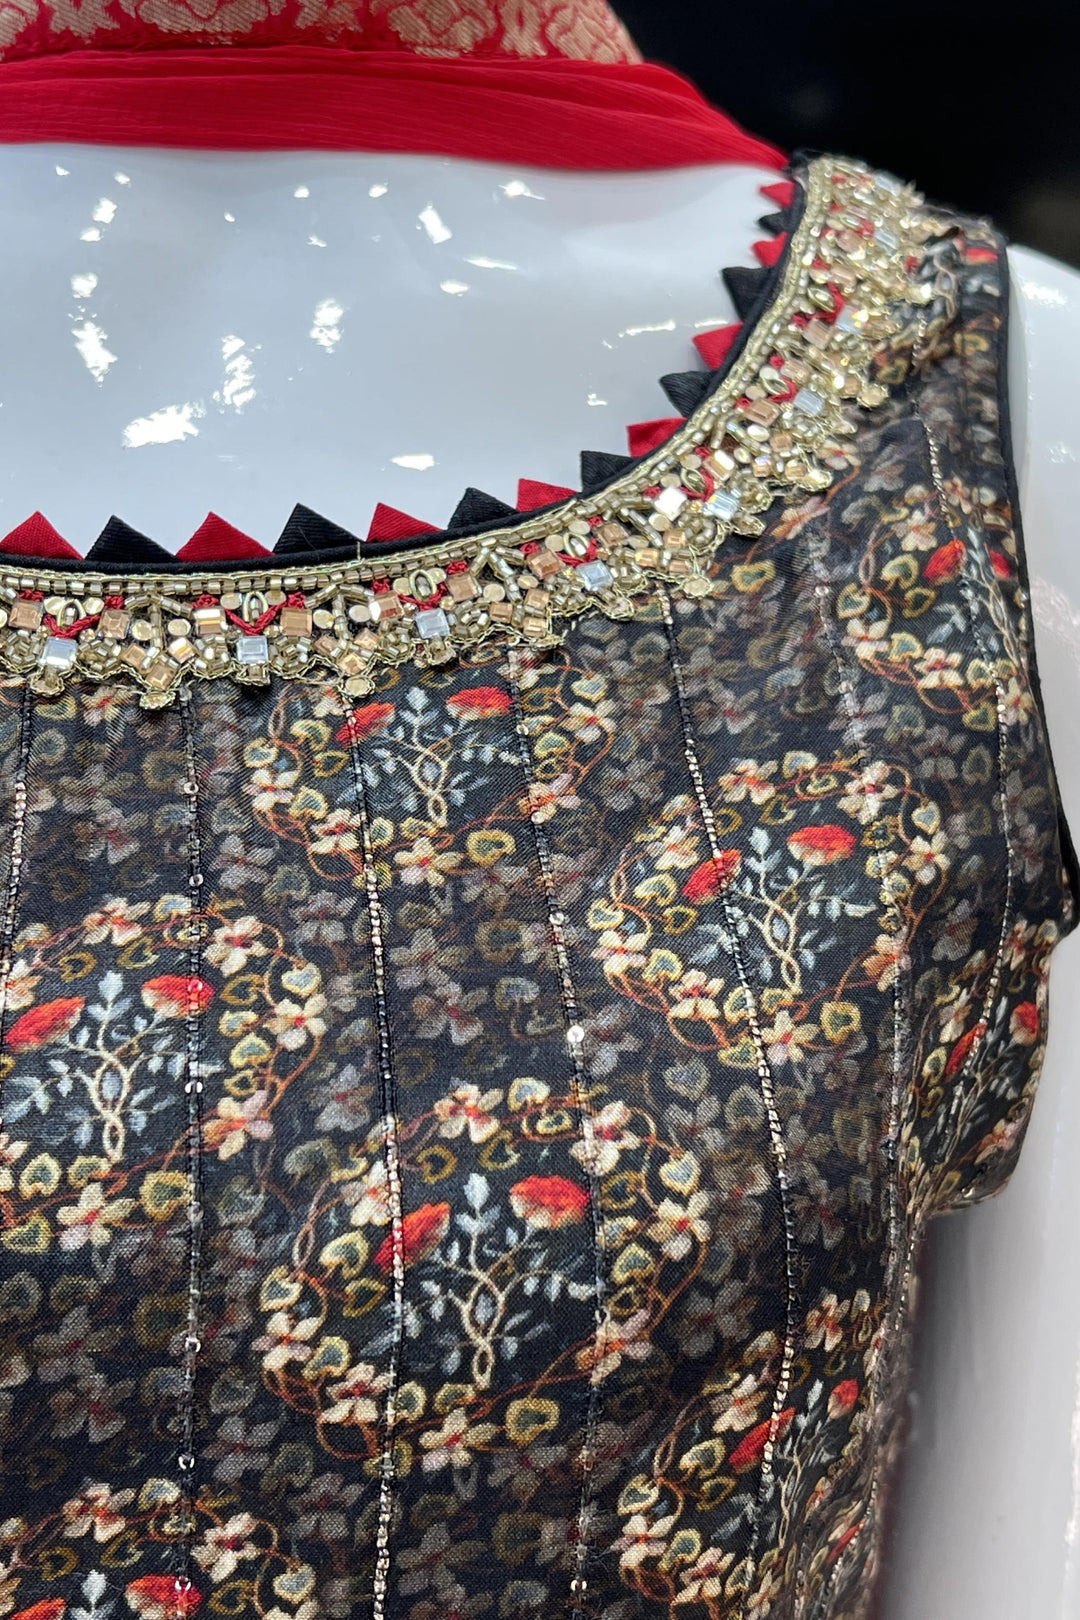 Black Mirror, Zari, Beads and Zardozi work with Floral Print Straight Cut Salwar Suit - Seasons Chennai